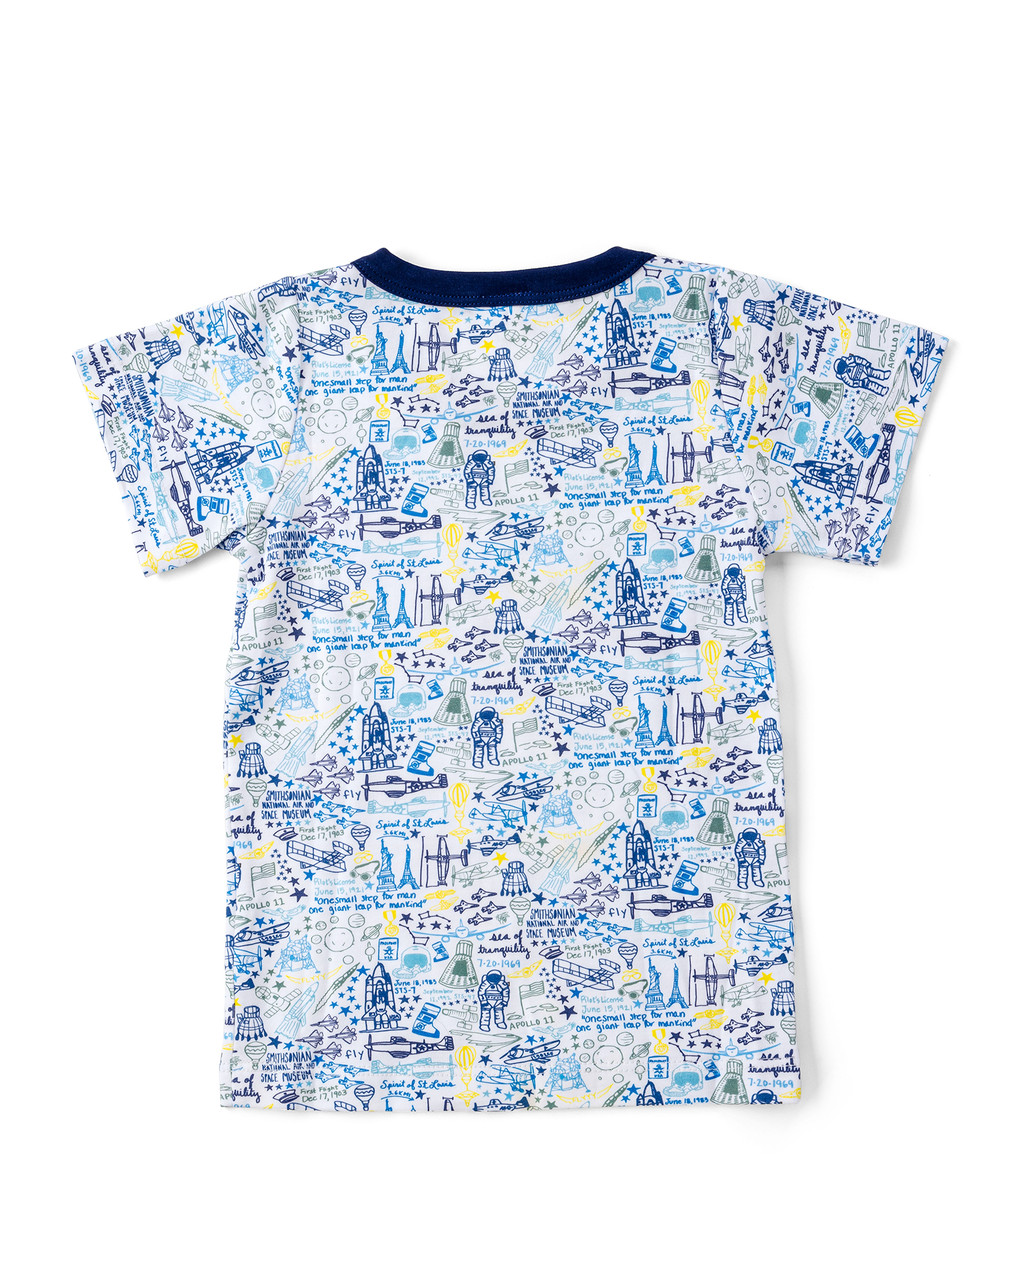 child labor simulator Kids T-Shirt for Sale by Nevermind-artss